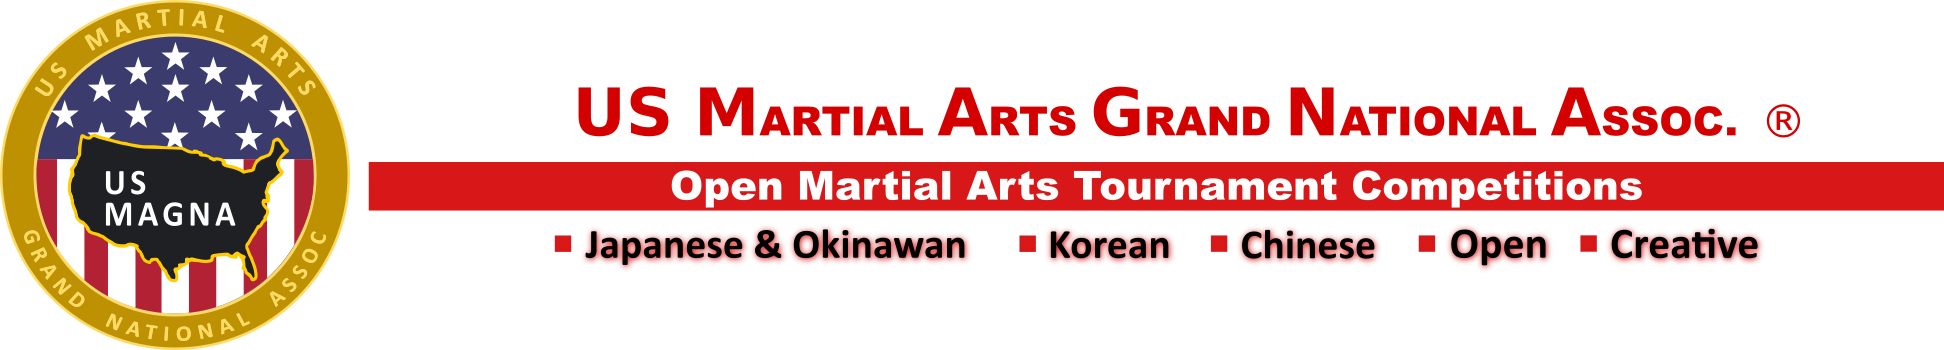 US Martial Arts Grand National Association